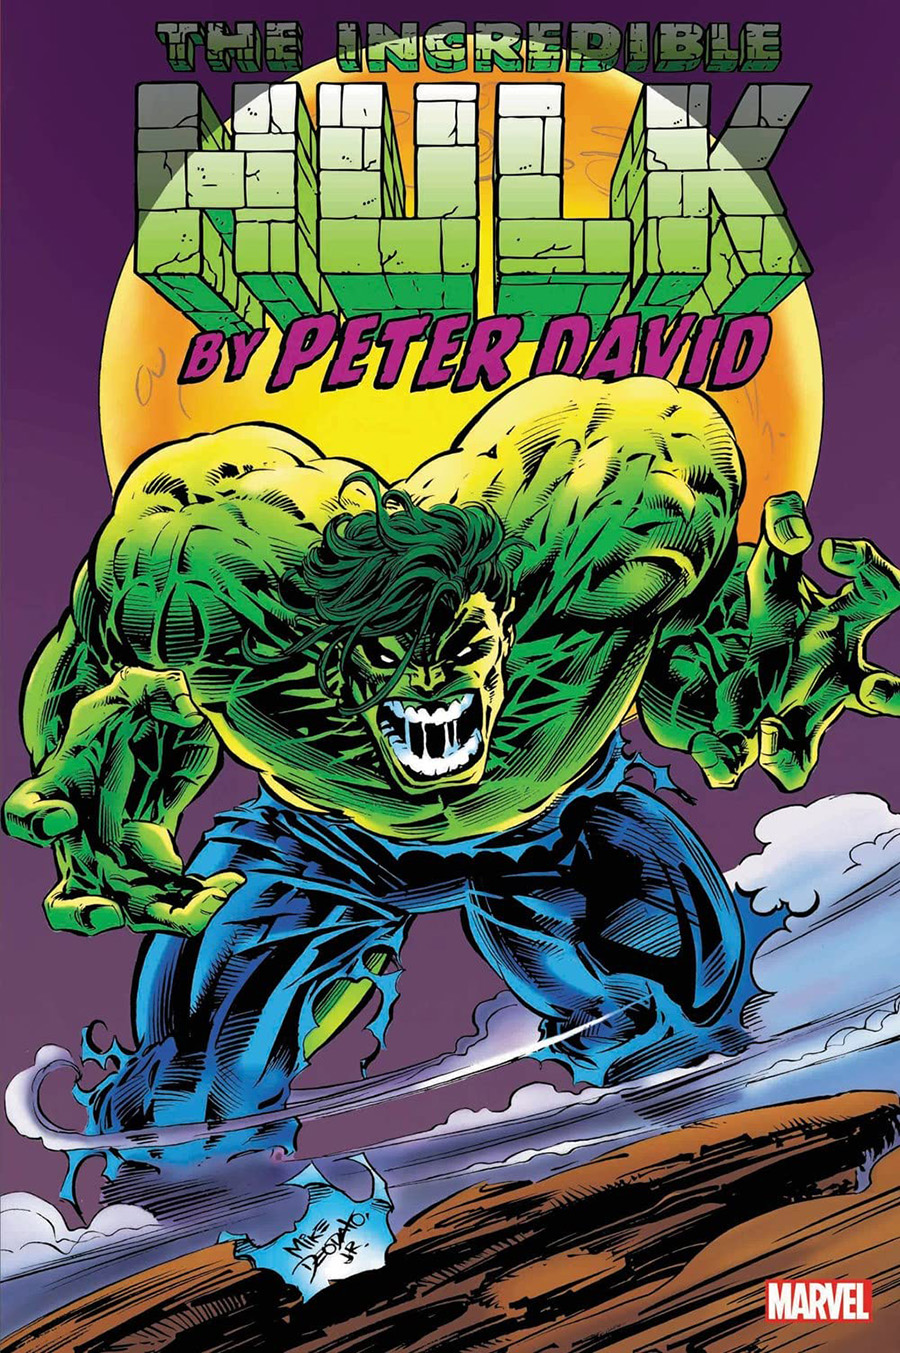 Incredible Hulk By Peter David Omnibus Vol 4 HC Book Market Mike Deodato Jr Cover